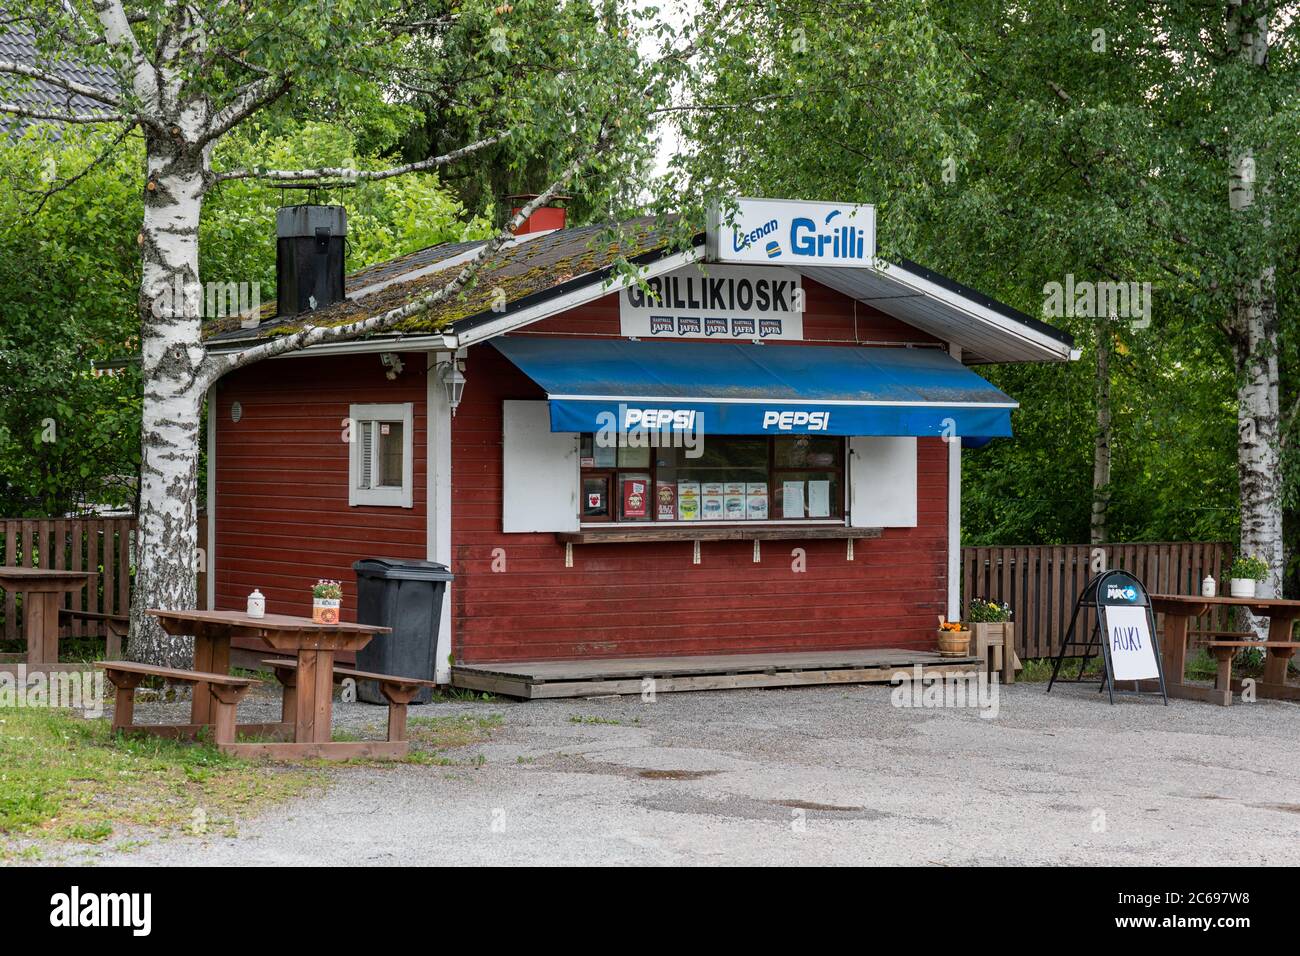 Leenan Grilli, wooden kiosk selling takeaway and fast food in Orivesi,  Finland Stock Photo - Alamy